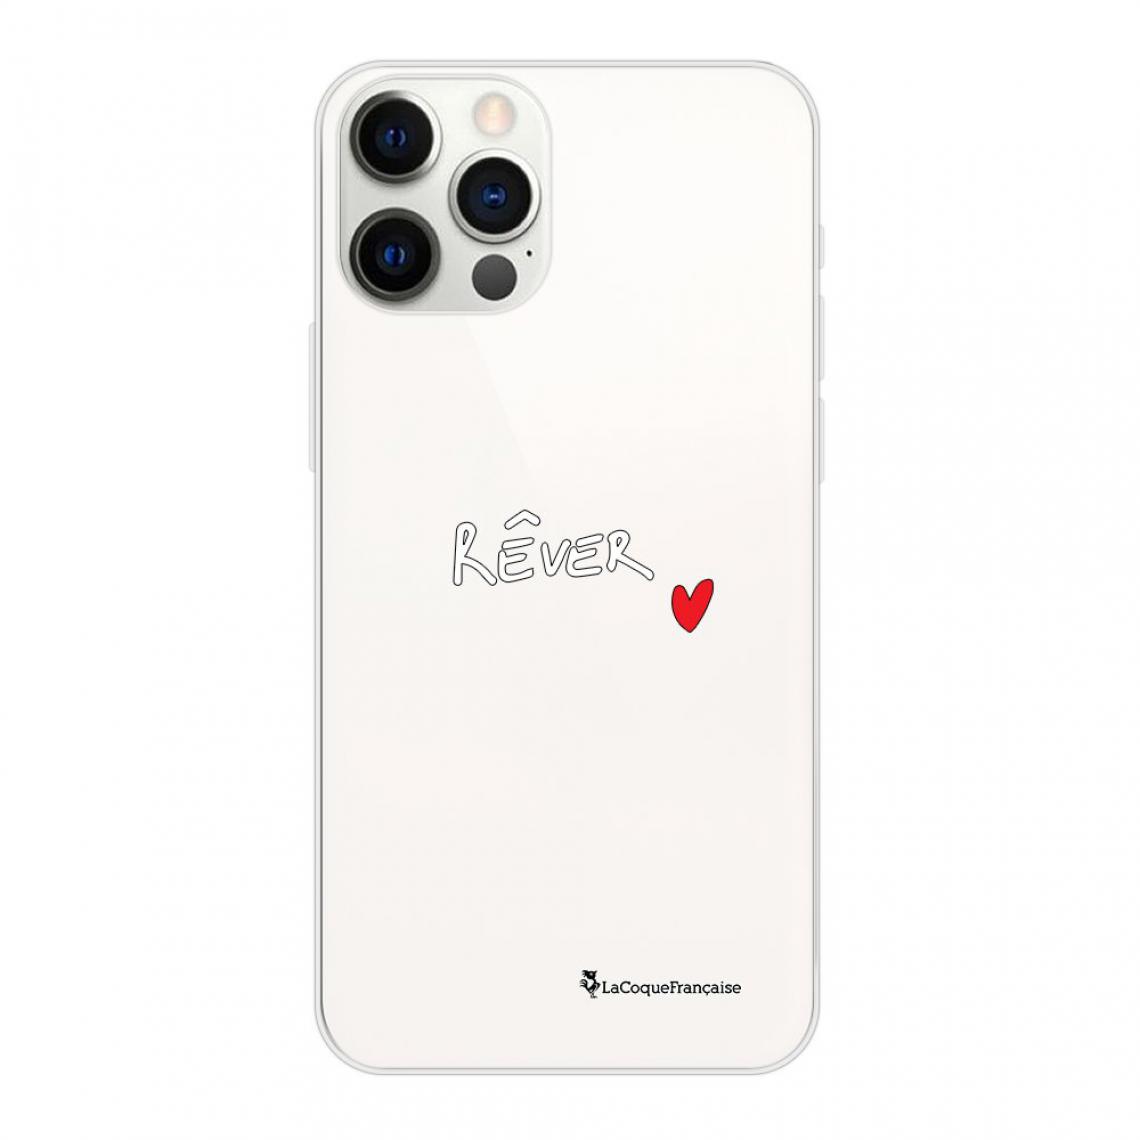 La Coque Francaise - Coque iPhone 12 Pro Max souple silicone transparente - Coque, étui smartphone